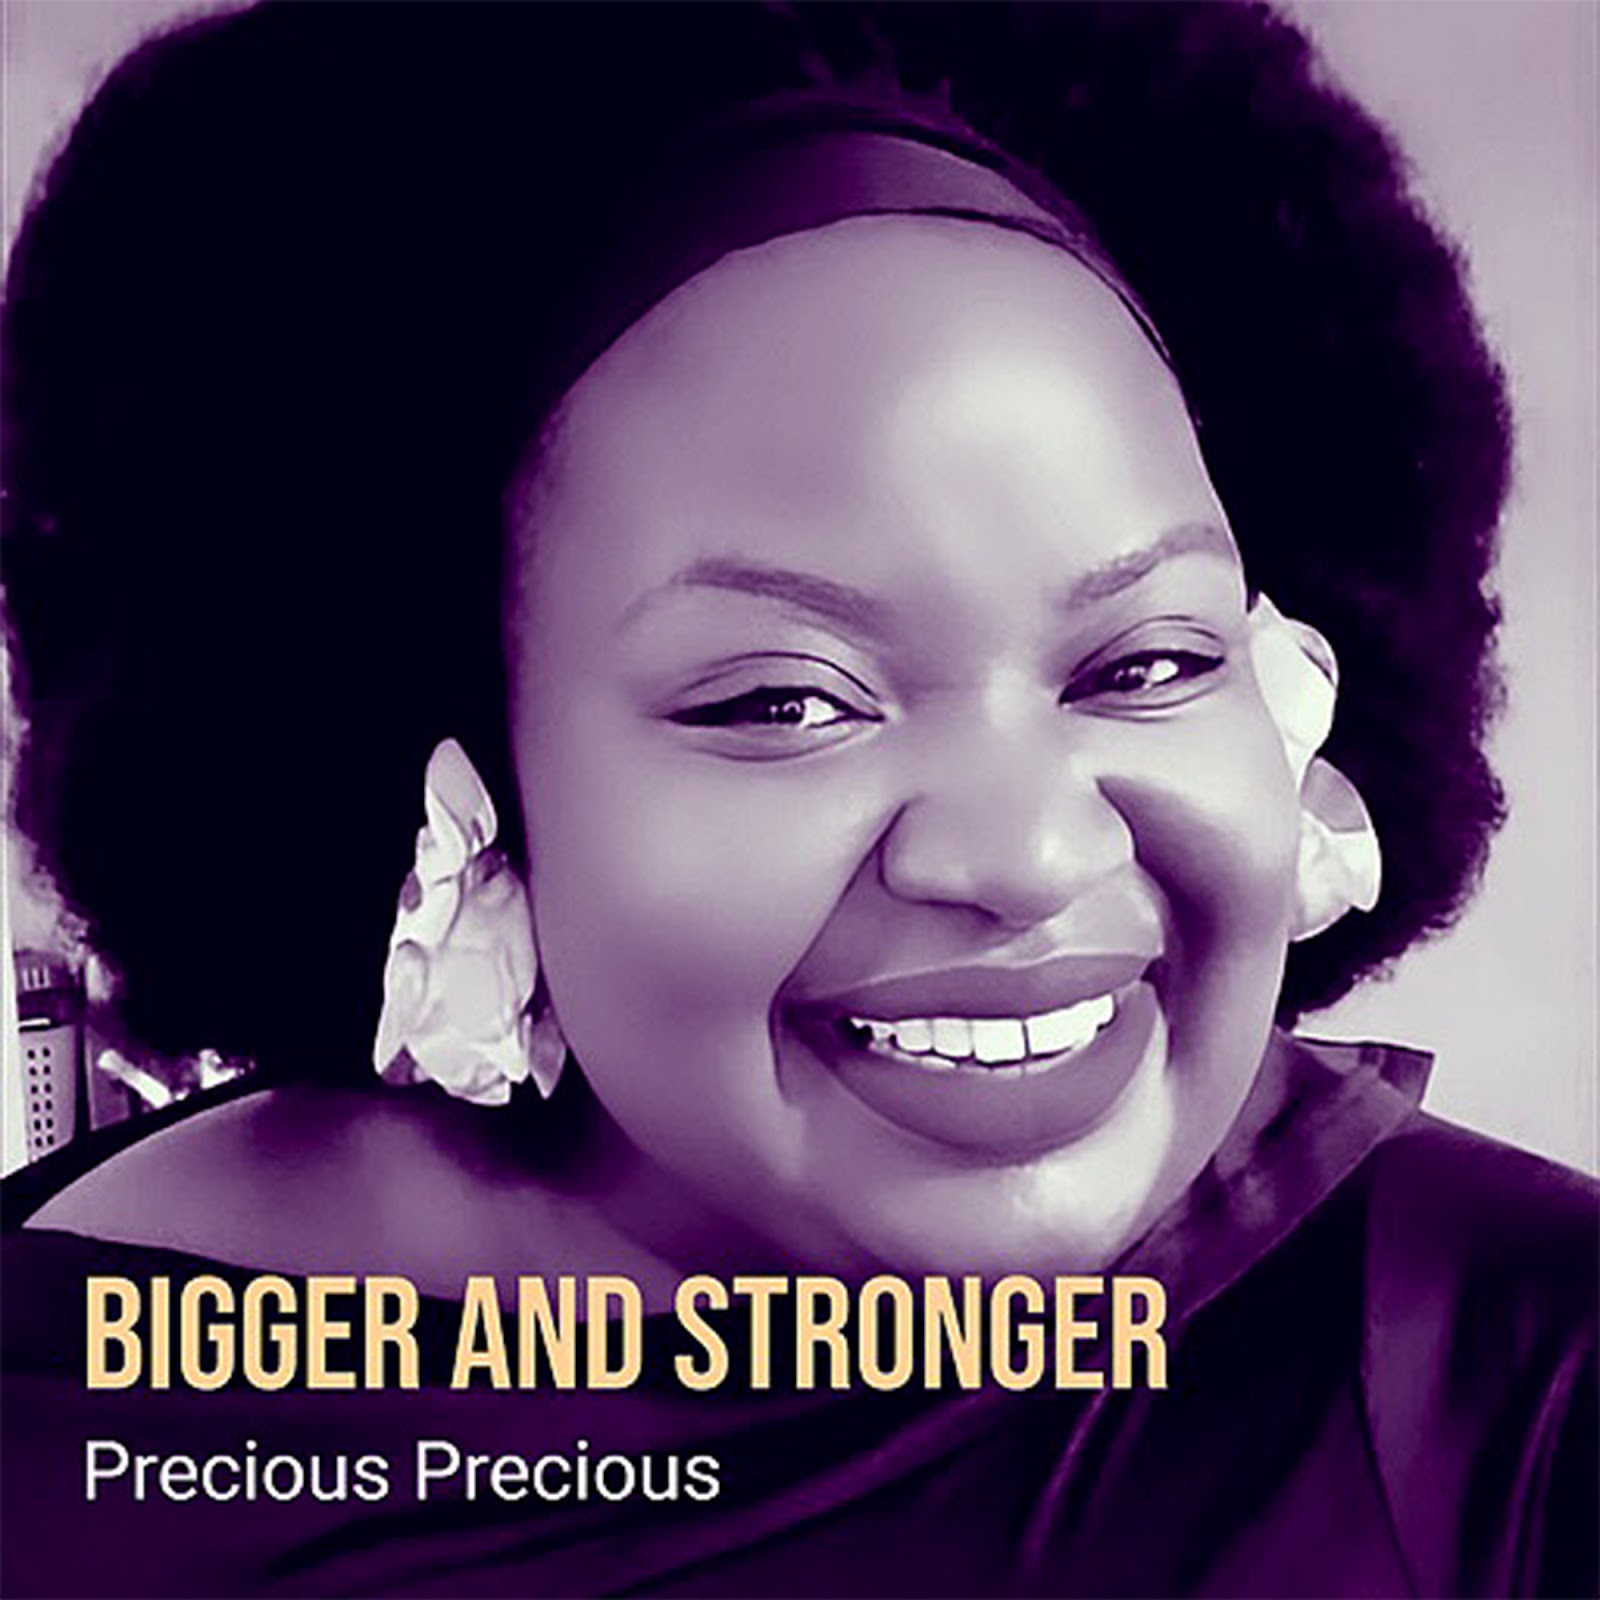 [Music] Bigger and Stronger - Precious Precious [Video]